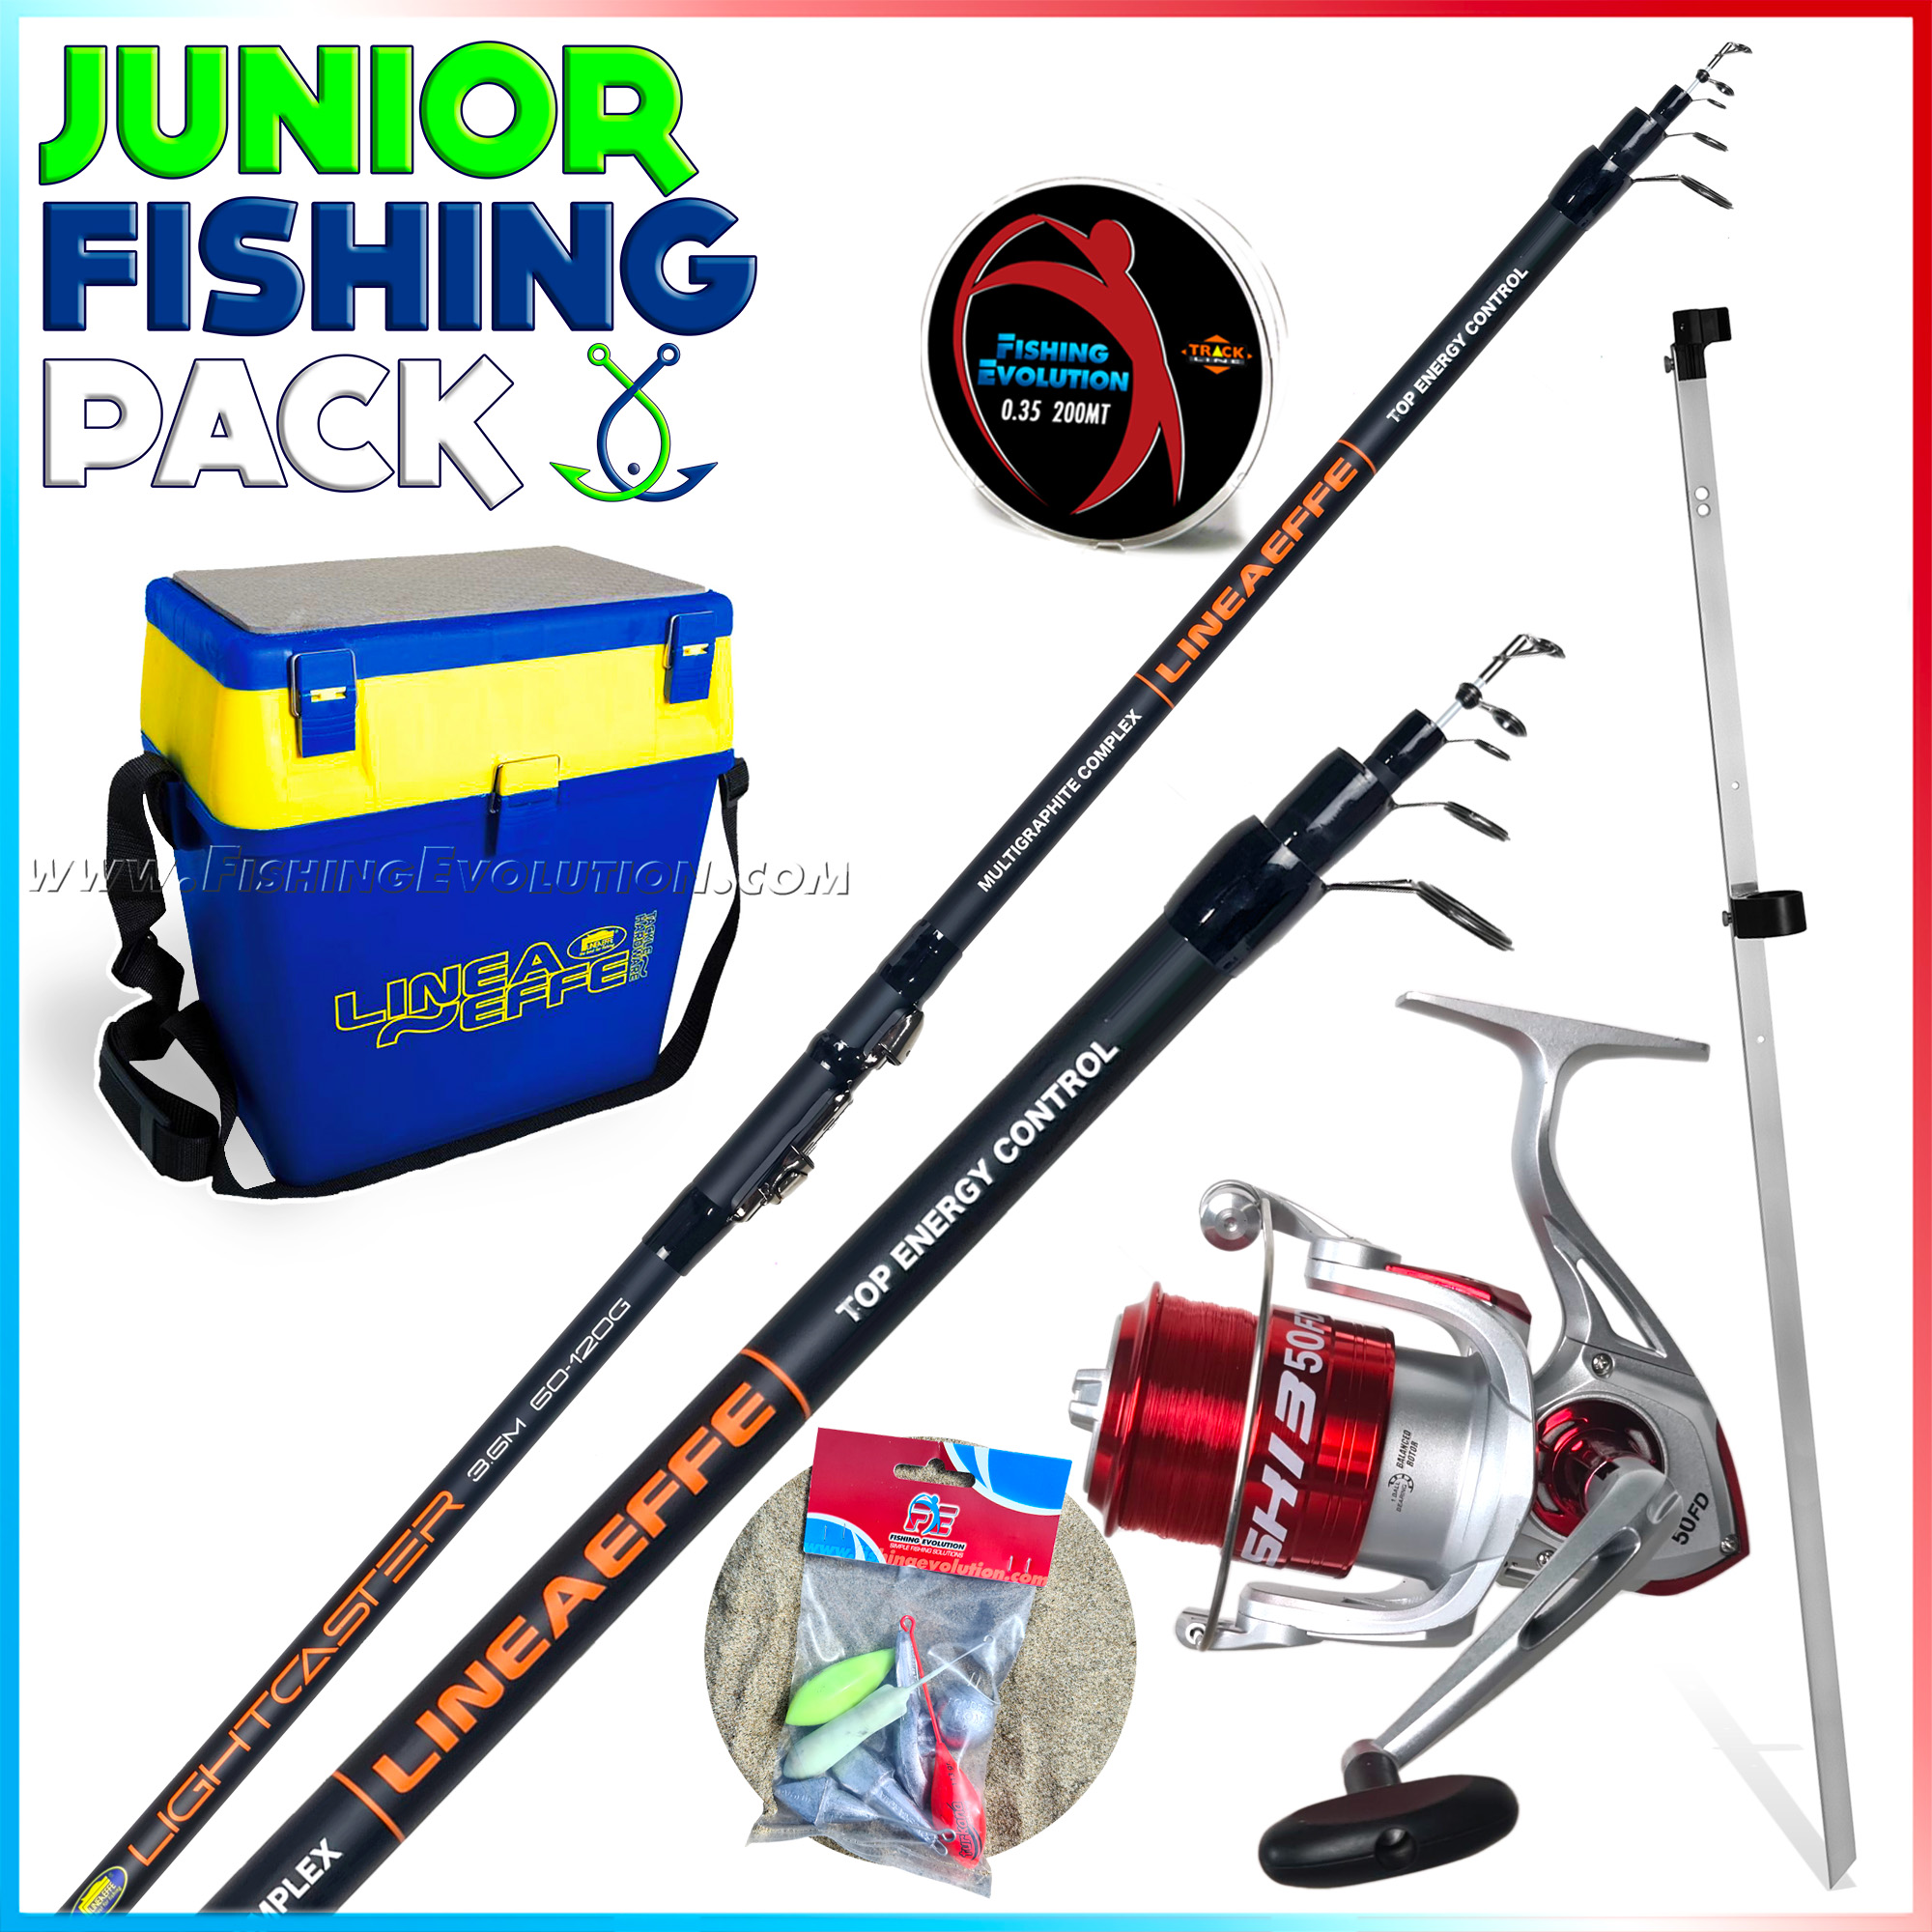 Fishing evolution Junior fishing pack